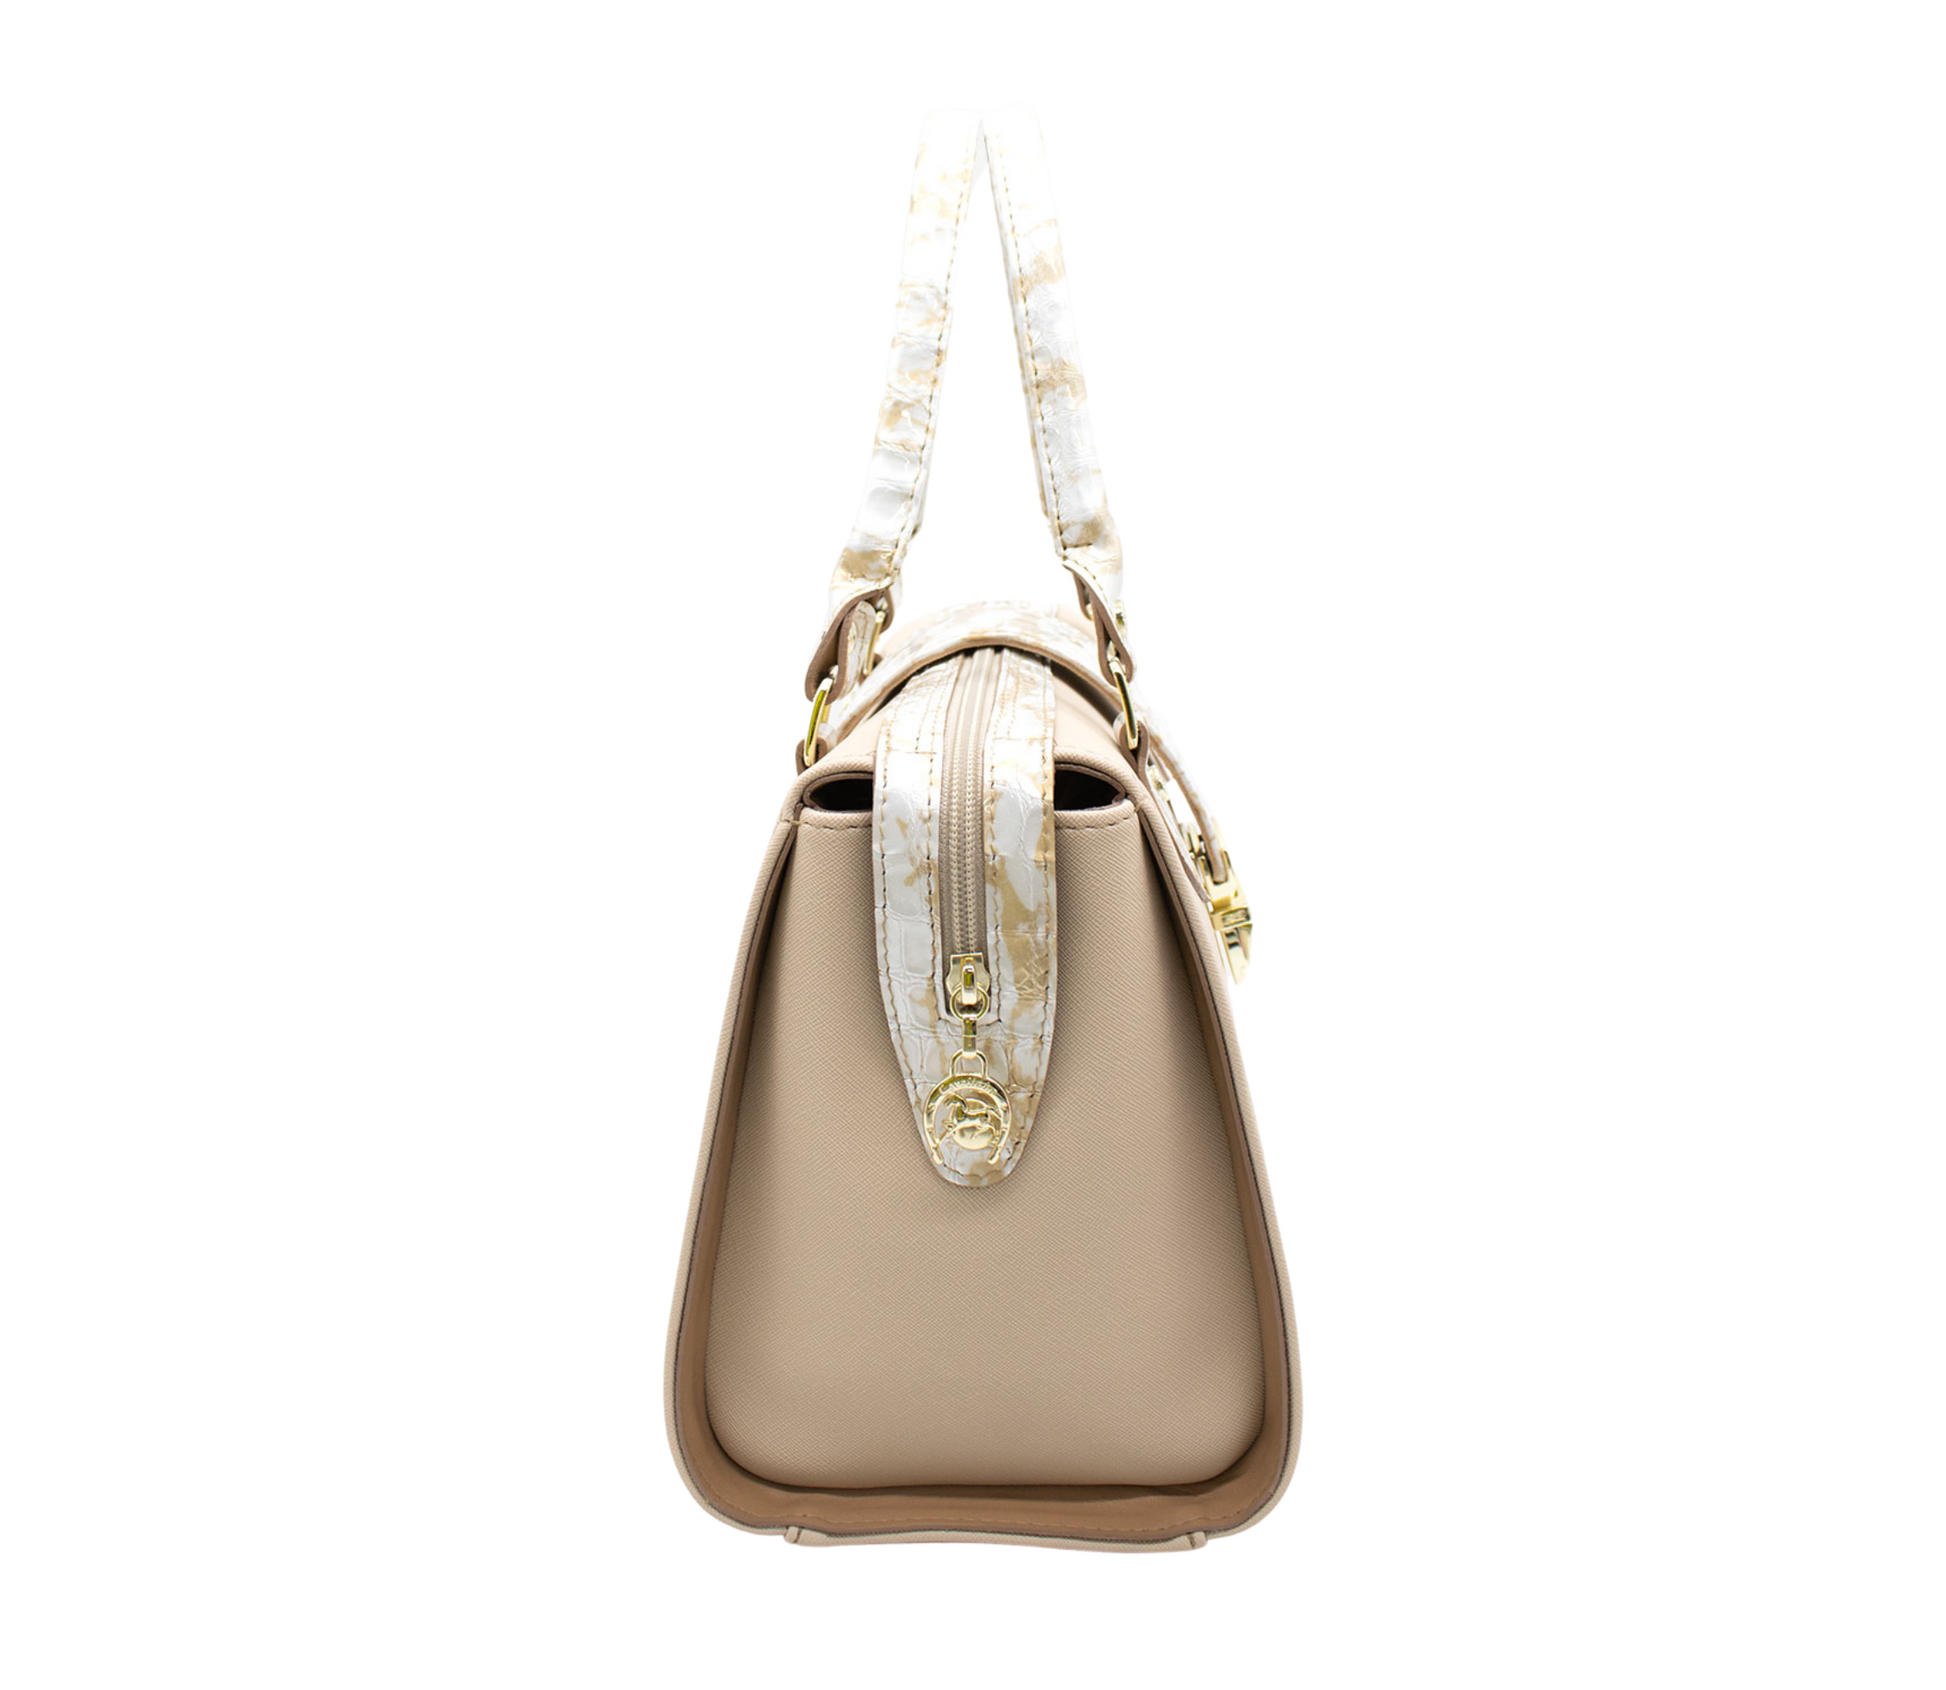 Cavalinho Mystic Handbag - Beige - 18460502.05_P03